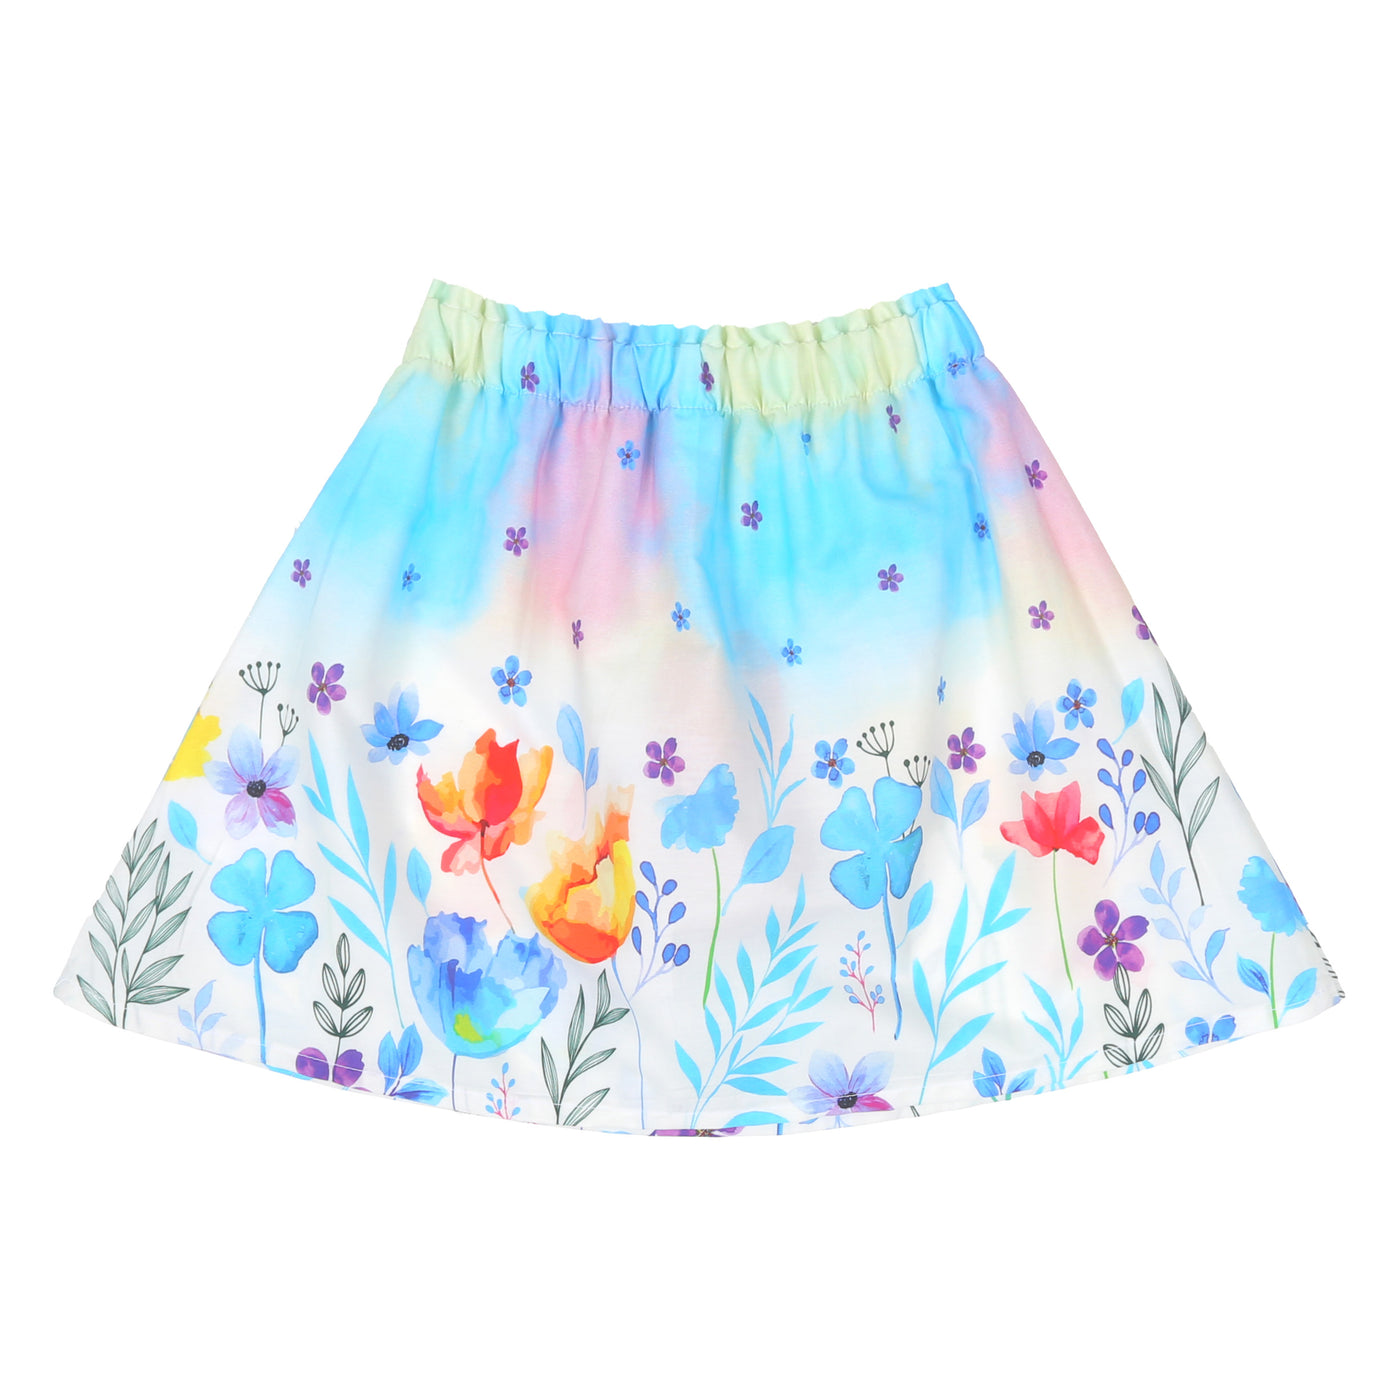 Infant Girls Digital Print Short Skirt Cotton Candy - Multi